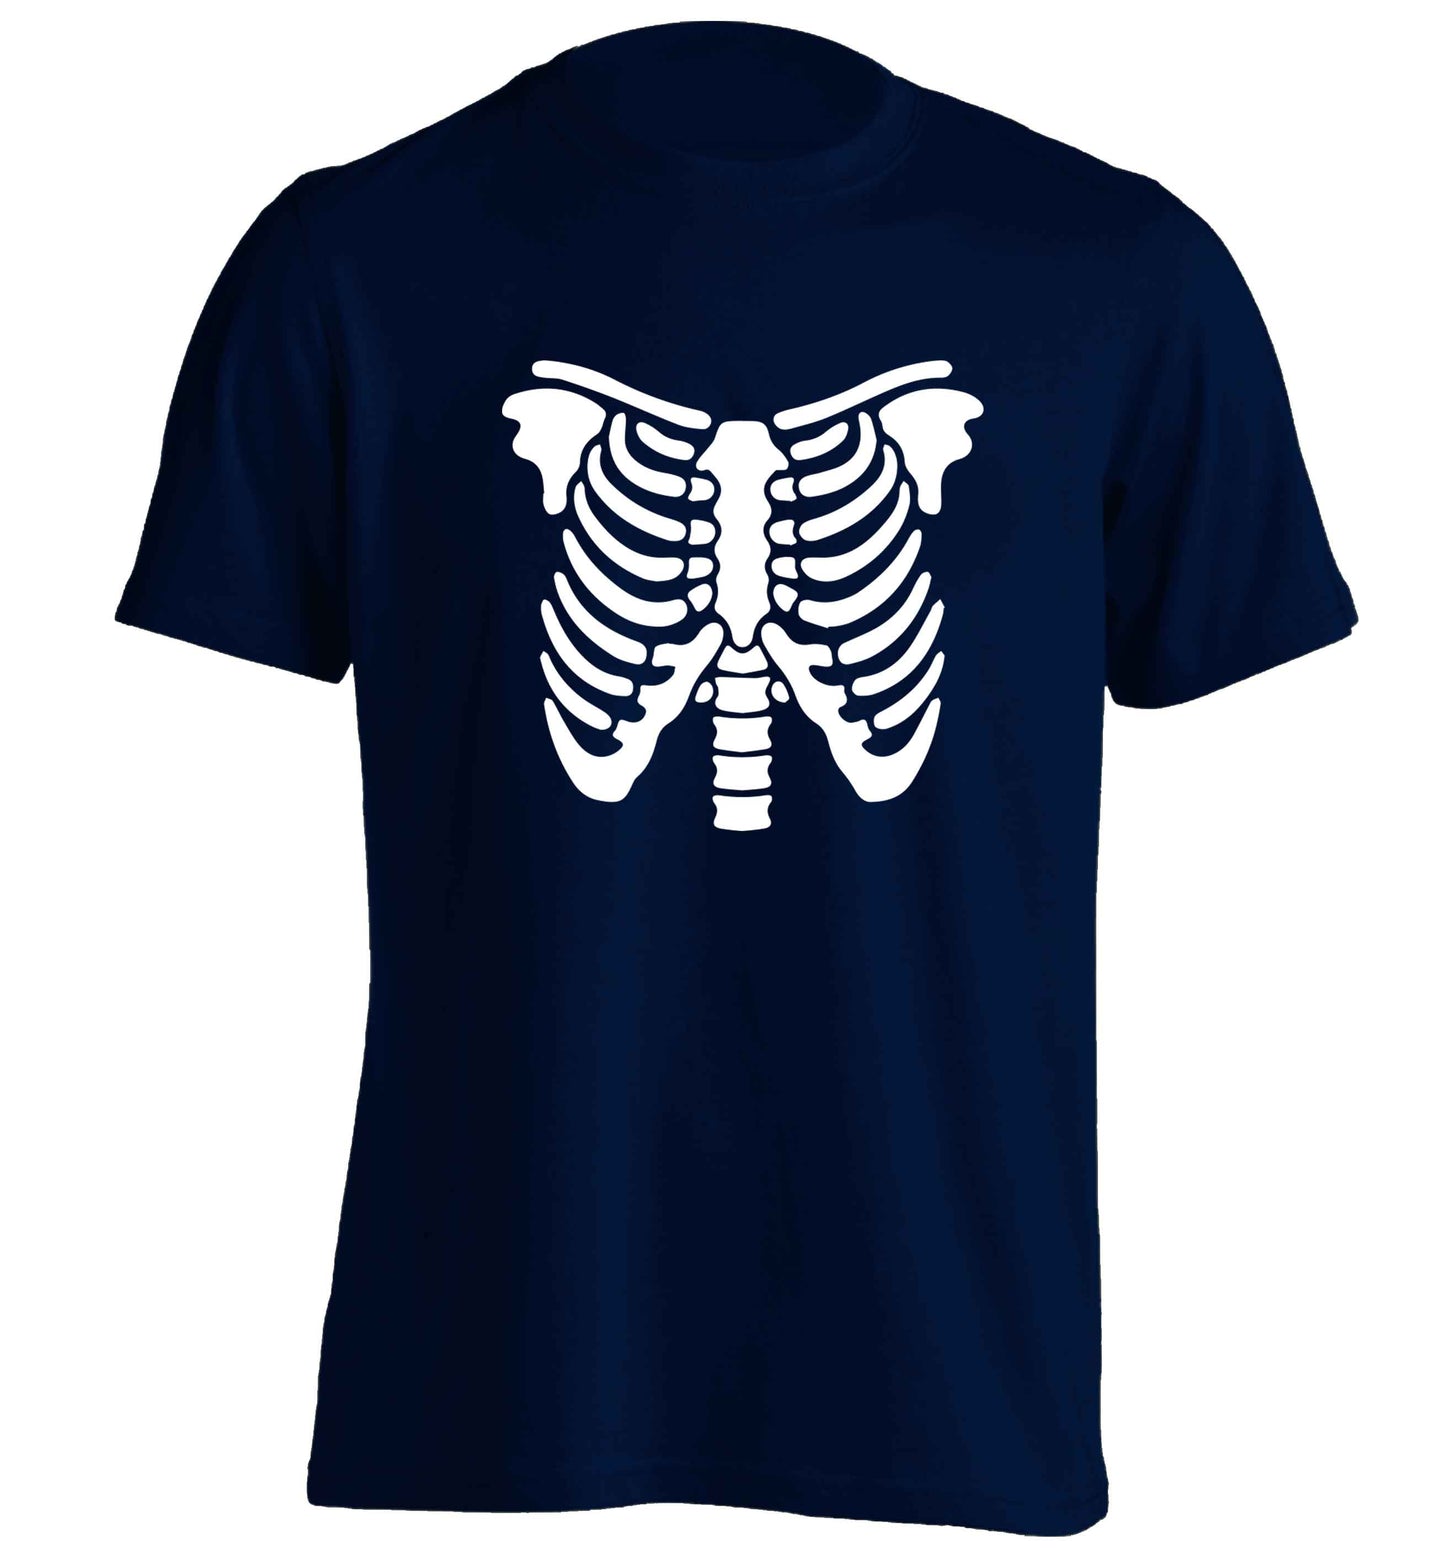 Skeleton ribcage adults unisex navy Tshirt 2XL